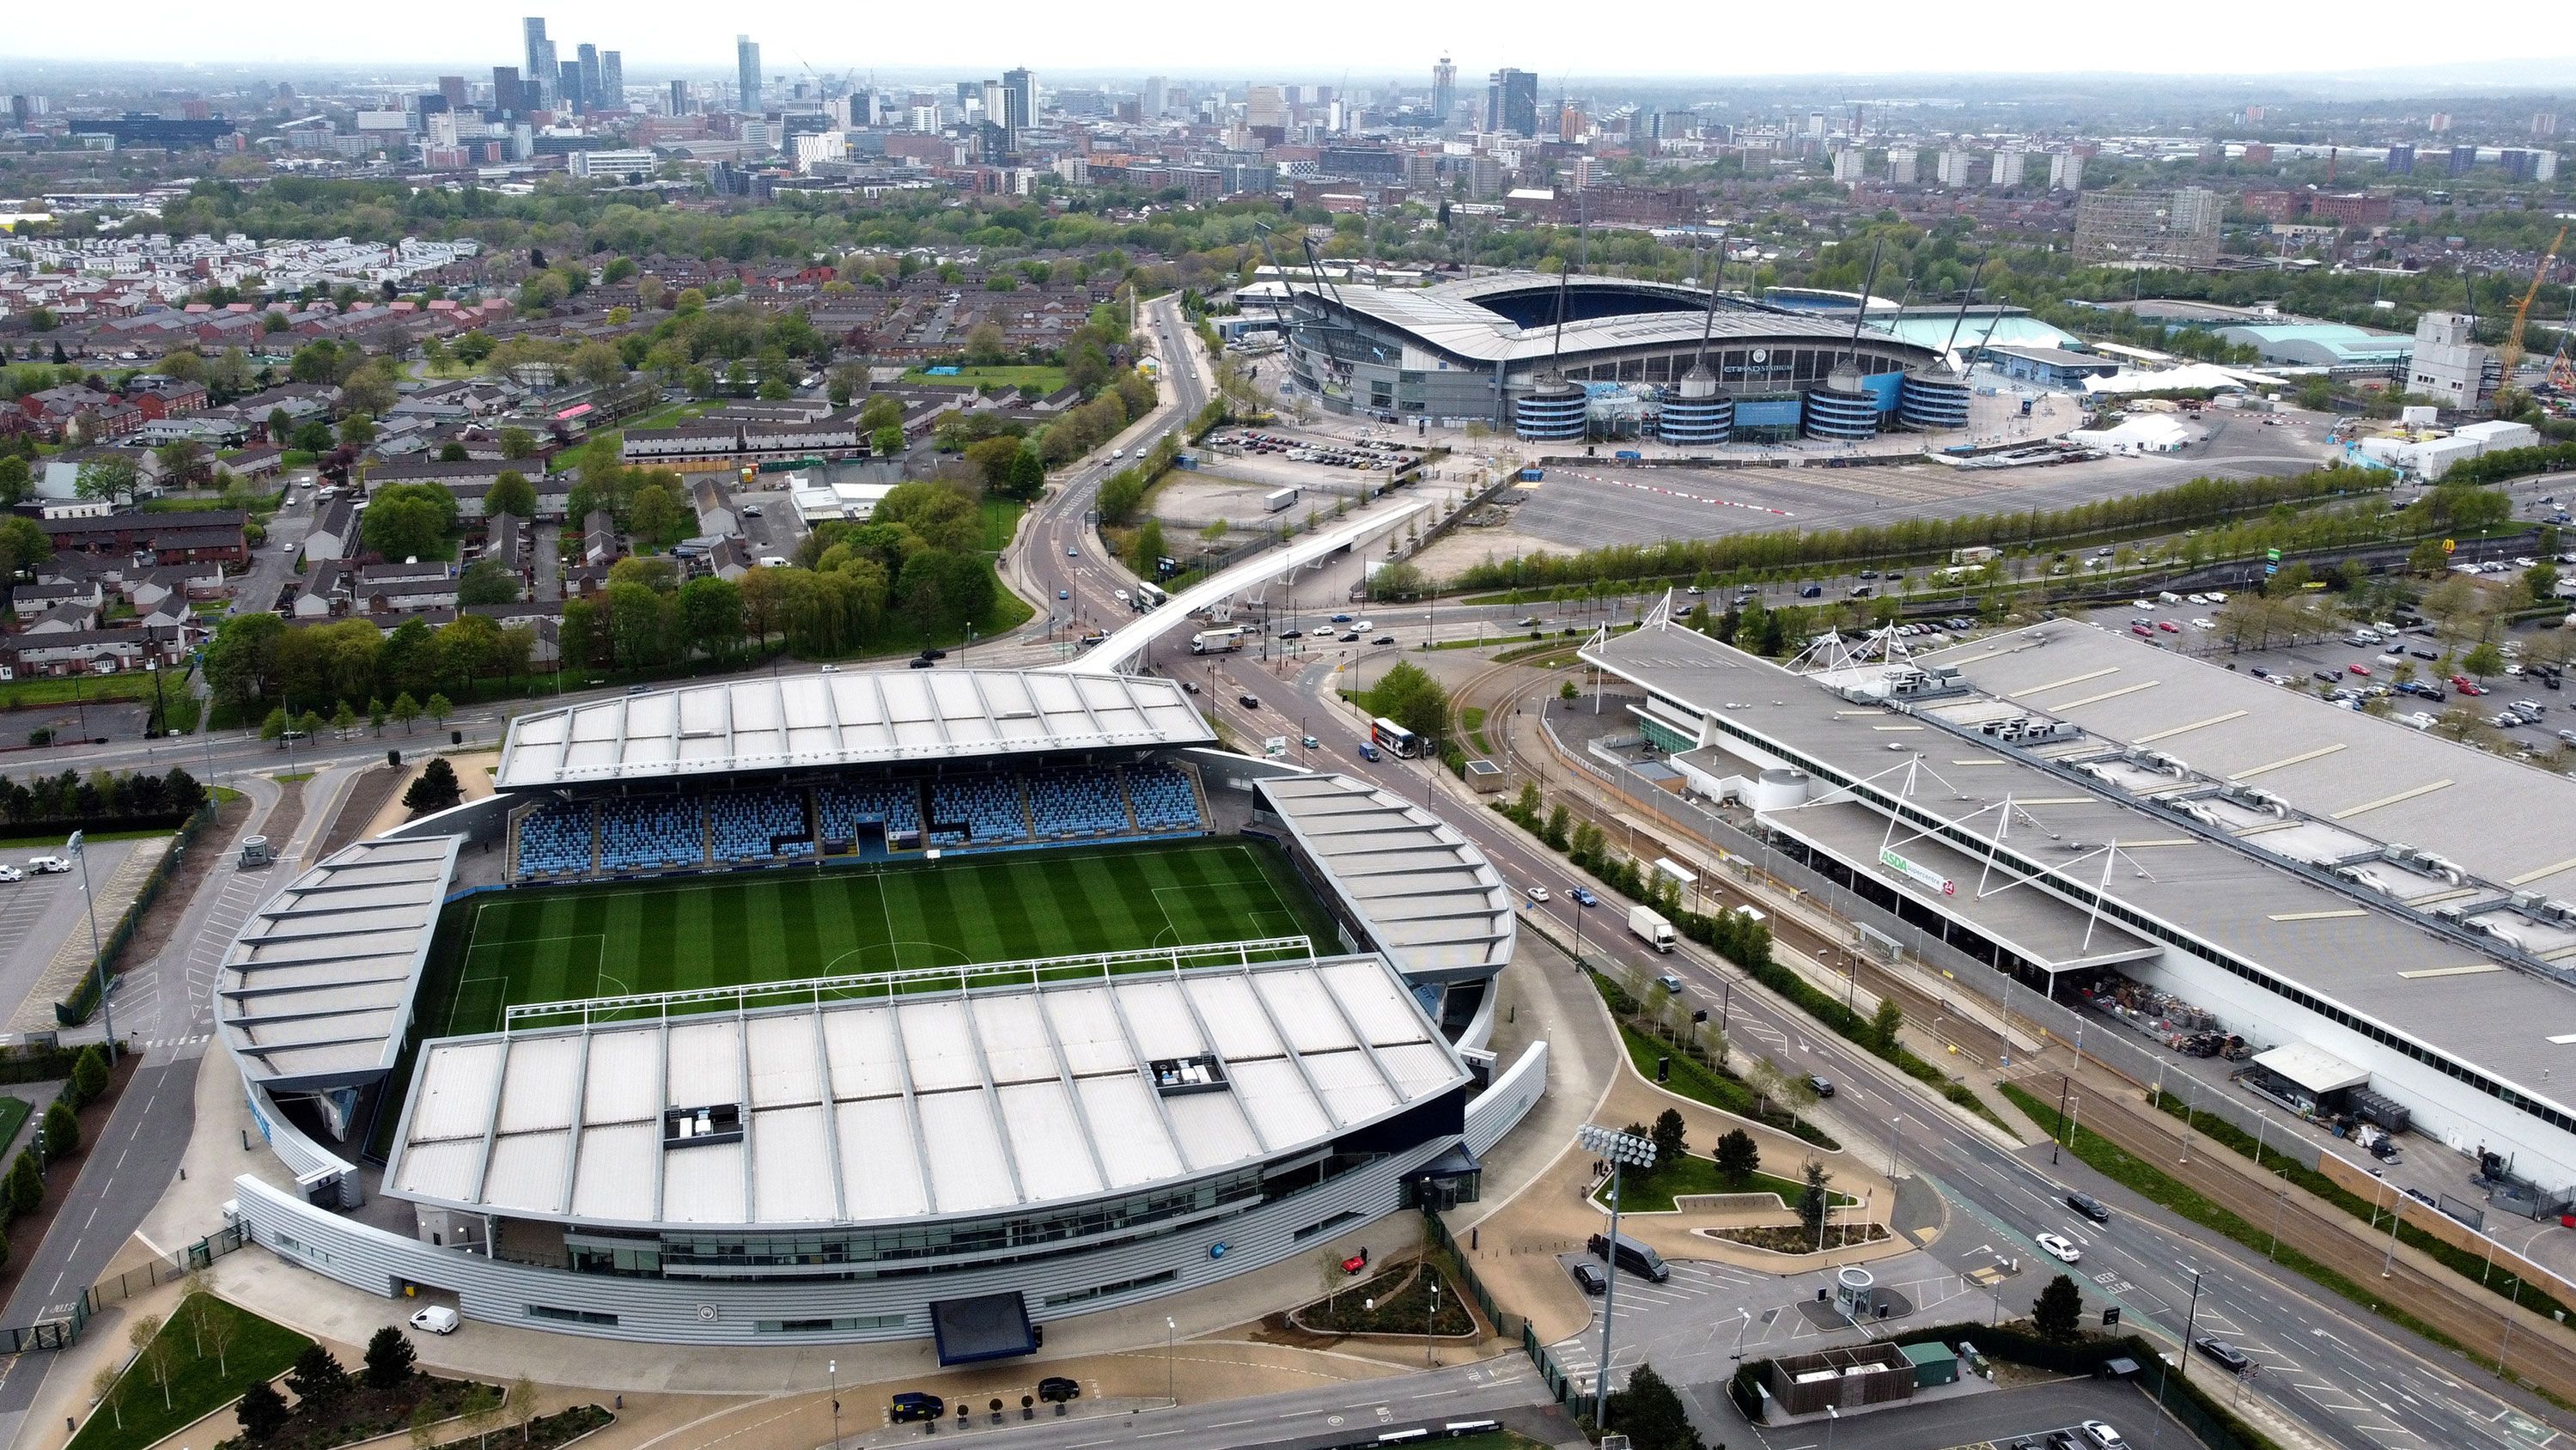 Manchester City Academy Stadium situated next to the Etihad Stadium, Manchester City's men's home ground.